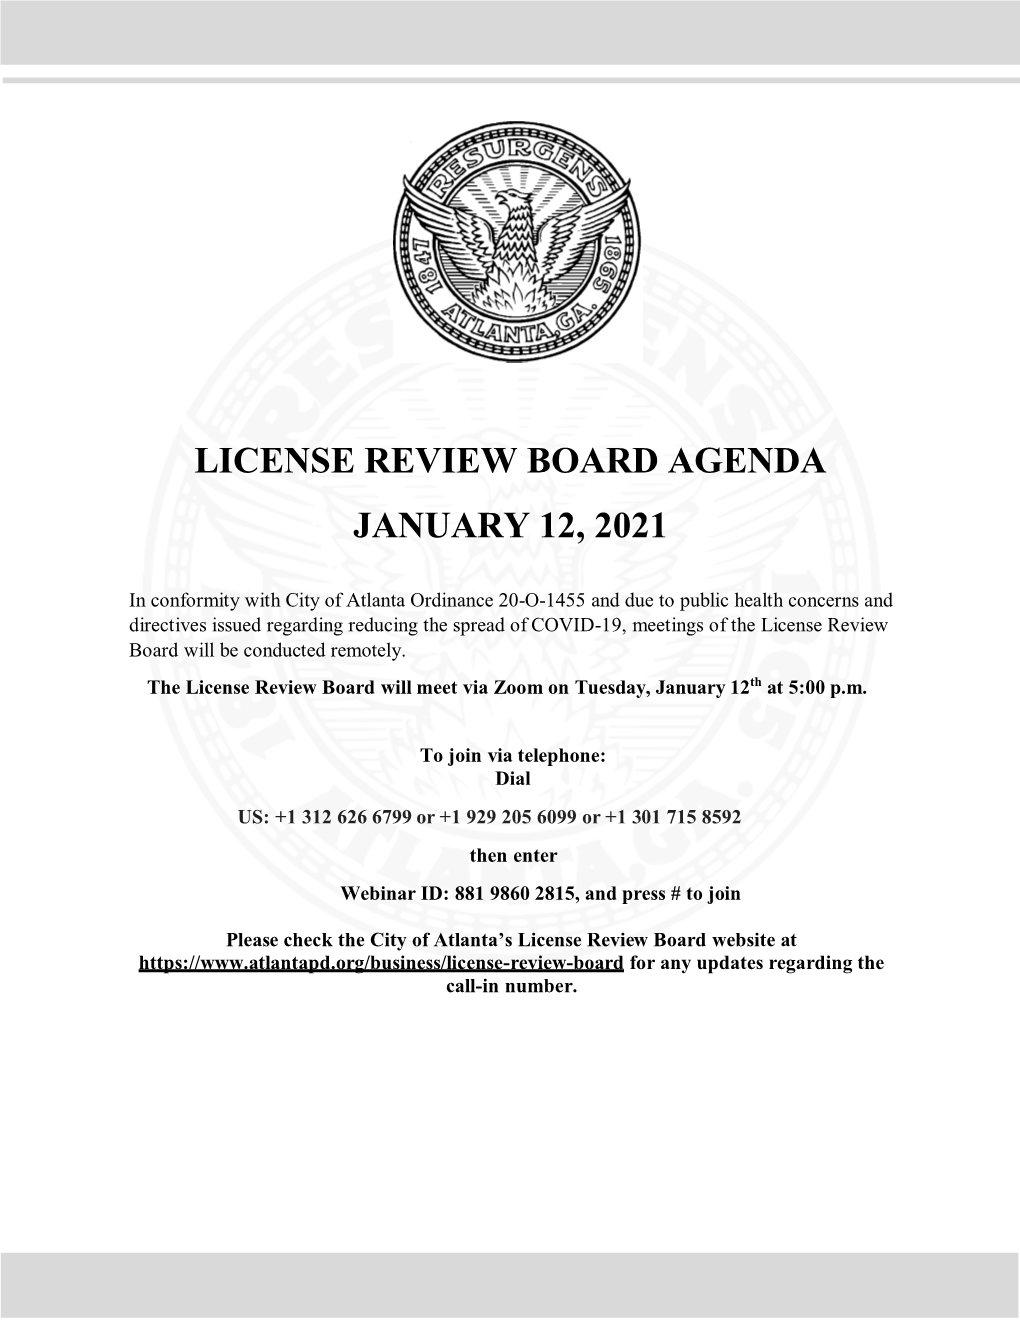 License Review Board Agenda January 12, 2021